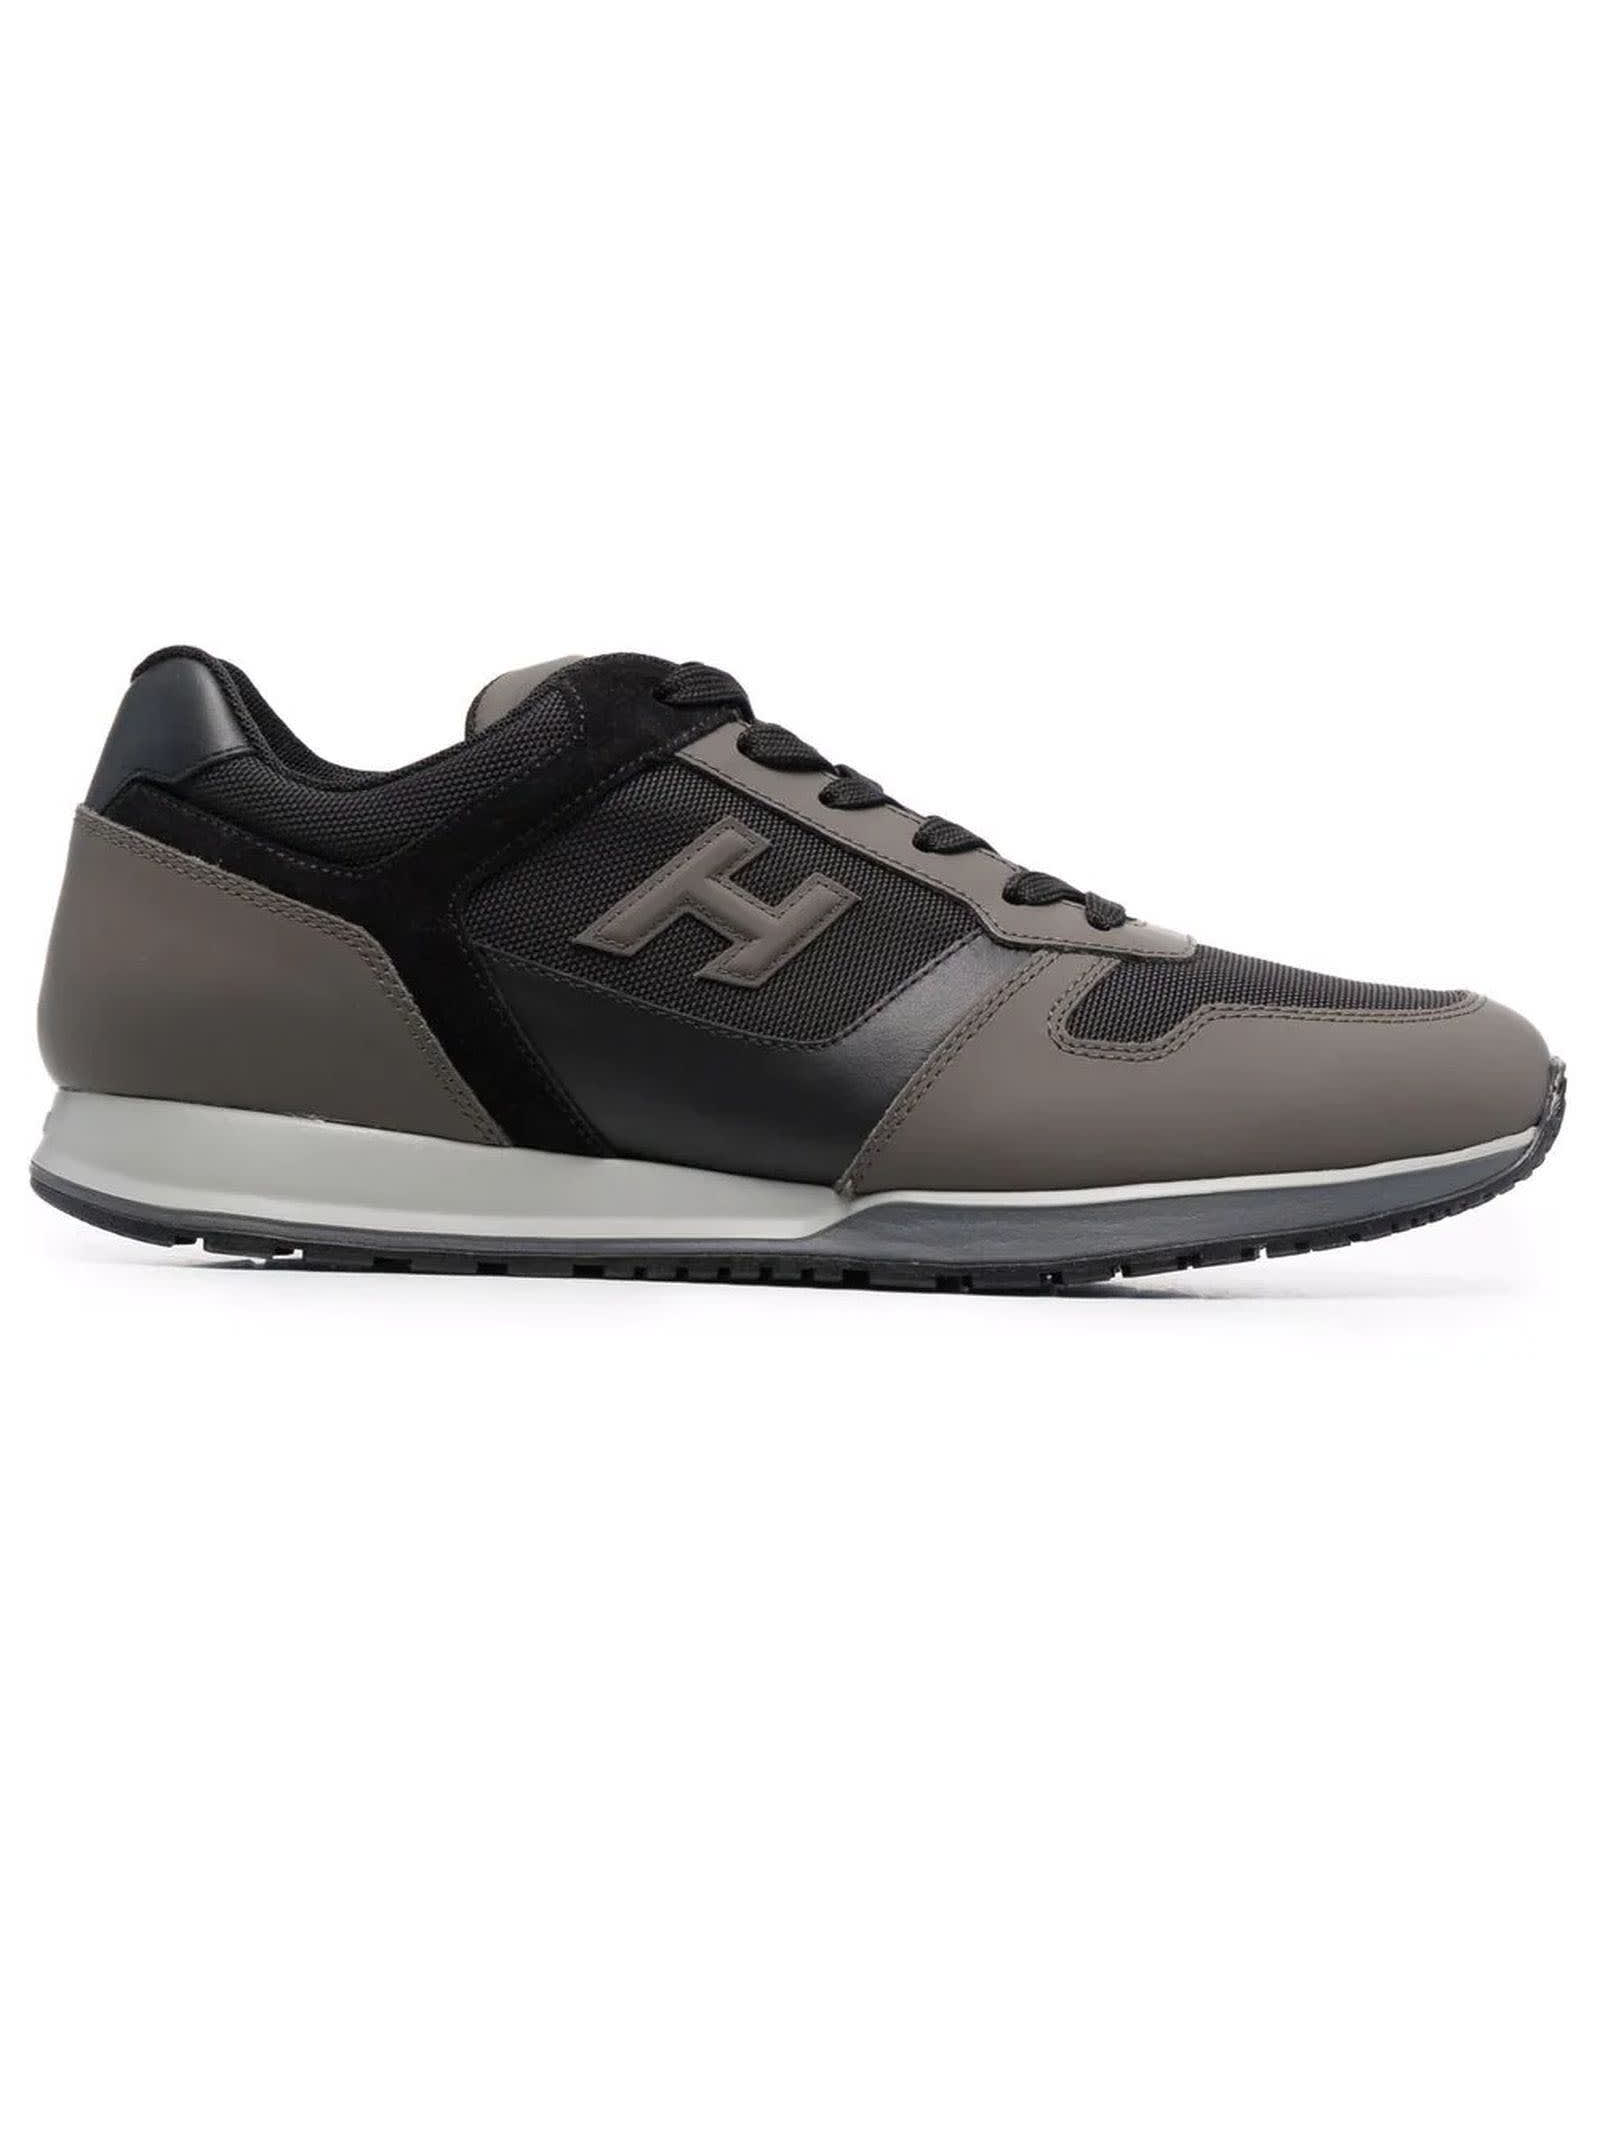 Hogan Sneakers H321 Black, Grey